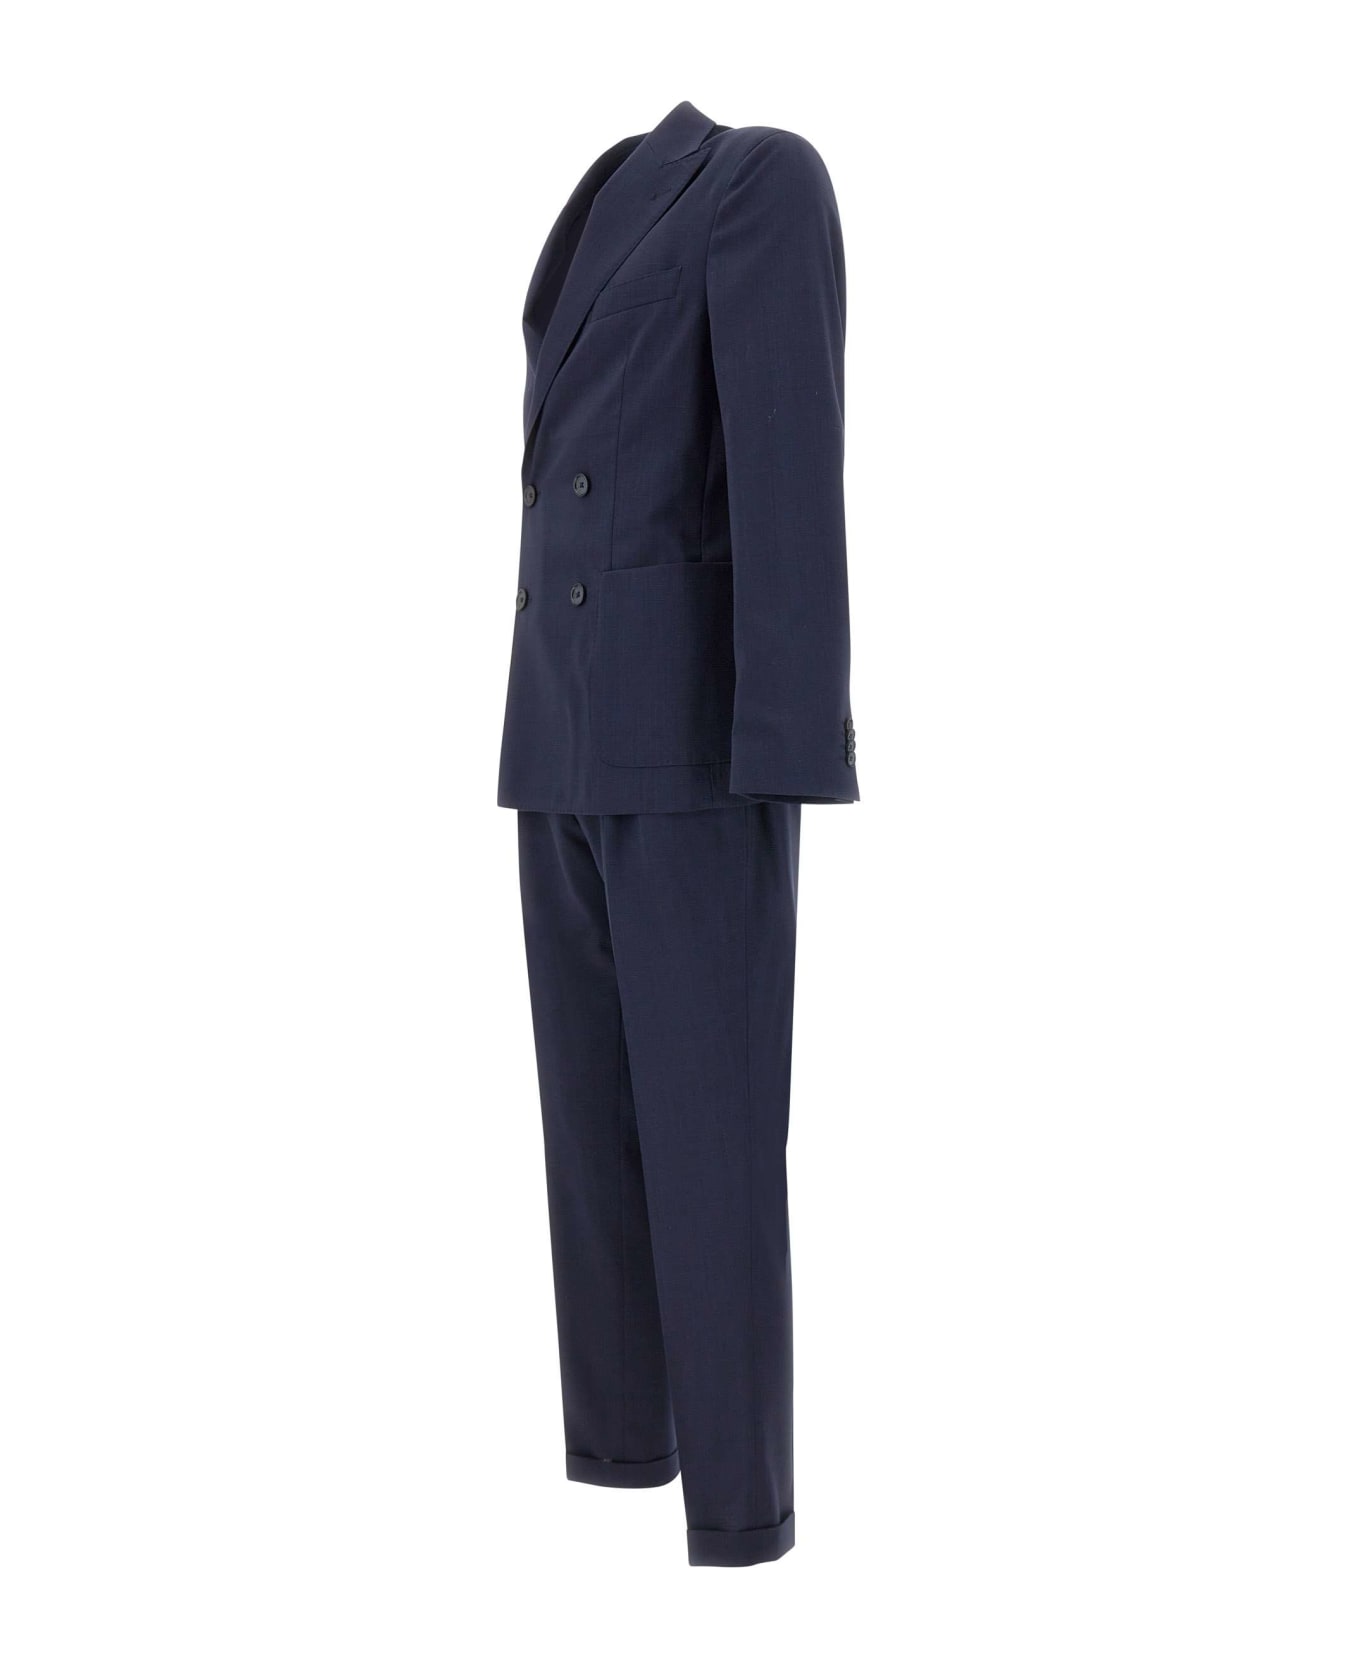 Hugo Boss "c-hanry" Fresh Wool Two-piece Suit - BLUE